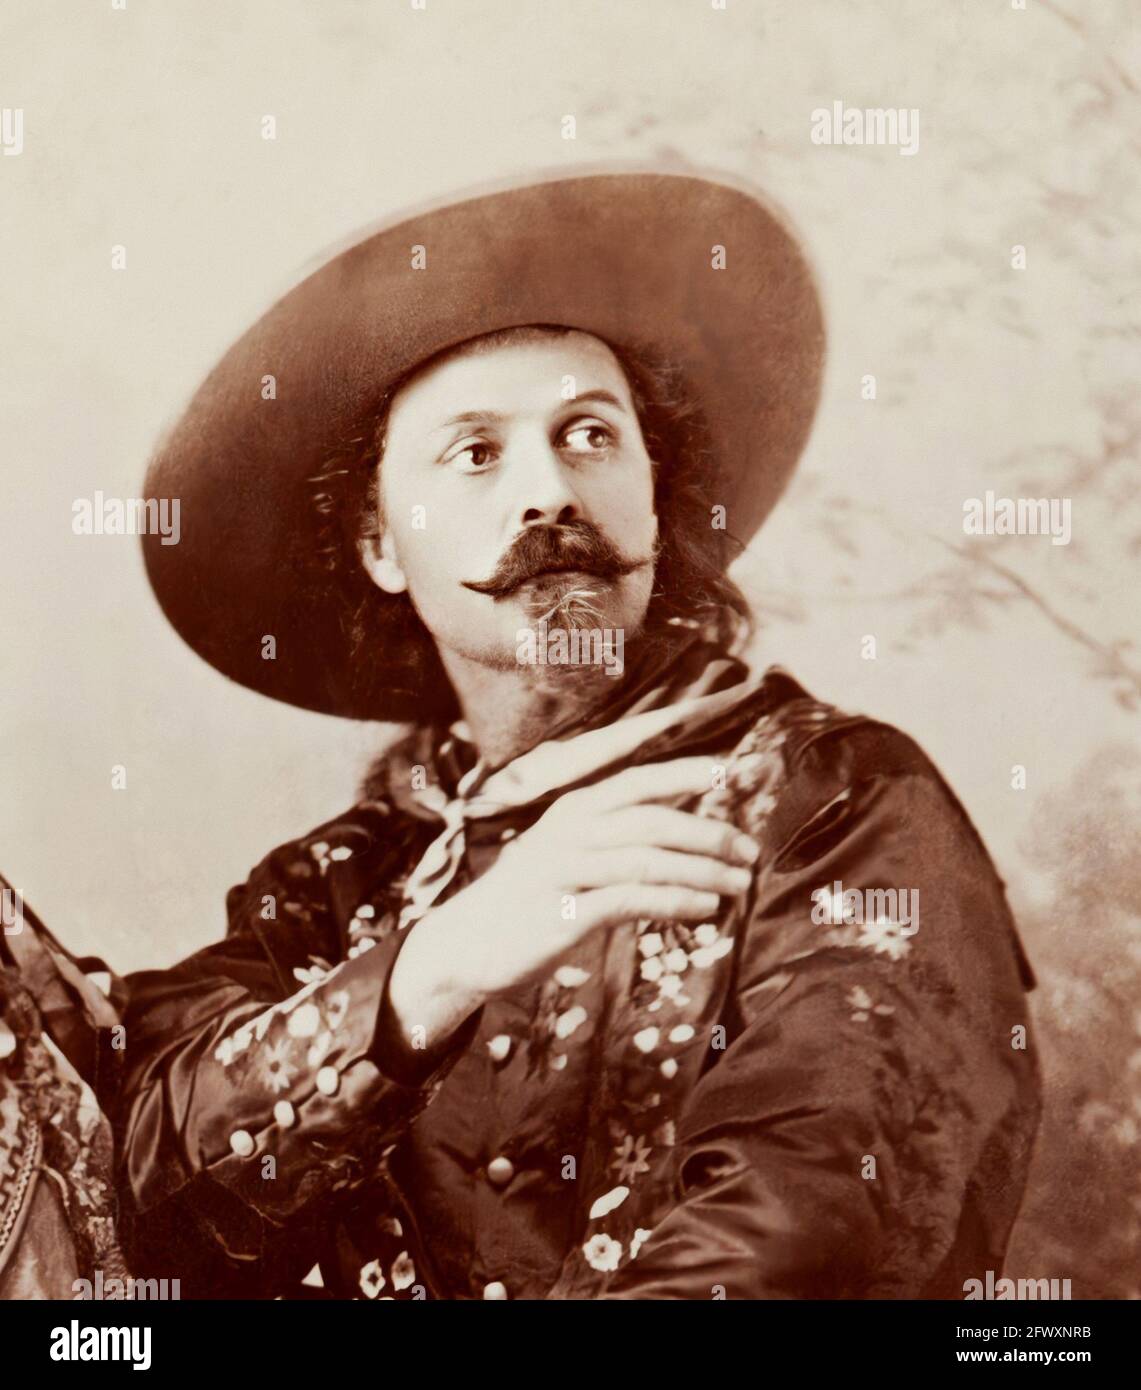 1880 ca , Montreal , CANADA : The celebrated Colonel William Frederick CODY , know as BUFFALO BILL ( 1846 - 1917 ) at  time of WILD WEST SHOW . Photo by W.M. Notman & Son , Montreal . - Epopea del Selvaggio WEST - cowboy - cow-boy  -  Circus - uomo anziano vecchio - older man  - baffi - barba - beard - moustache - Circo - hat - cappello --- Archivio GBB Stock Photo